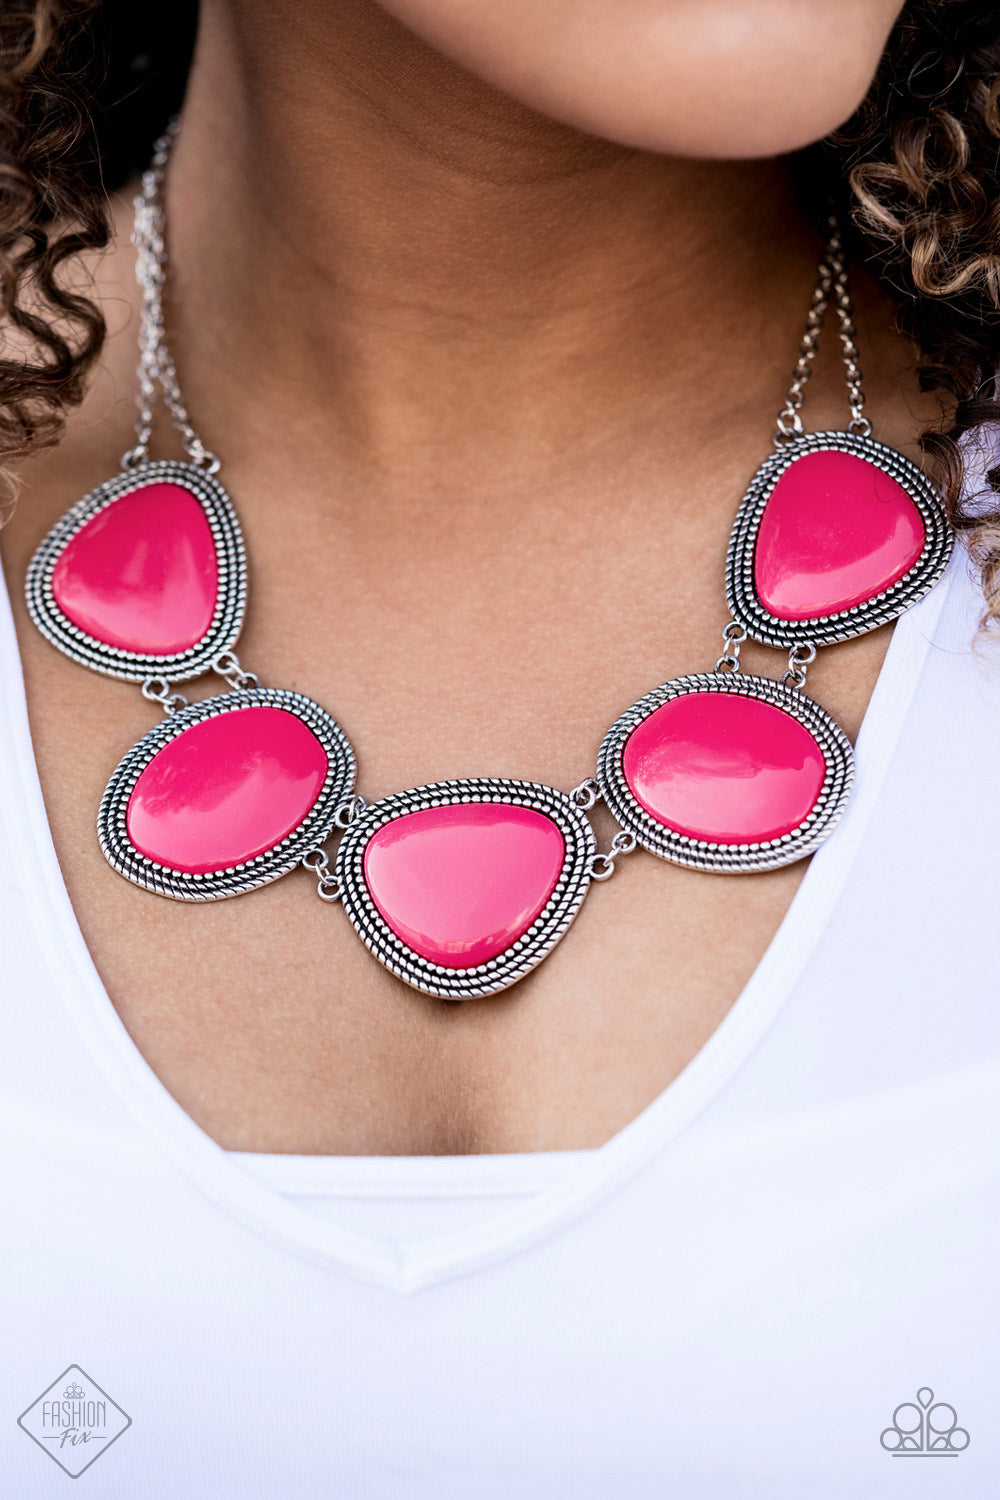 Paparazzi Accessories Viva La VIVID Pink Necklace & Earrings 